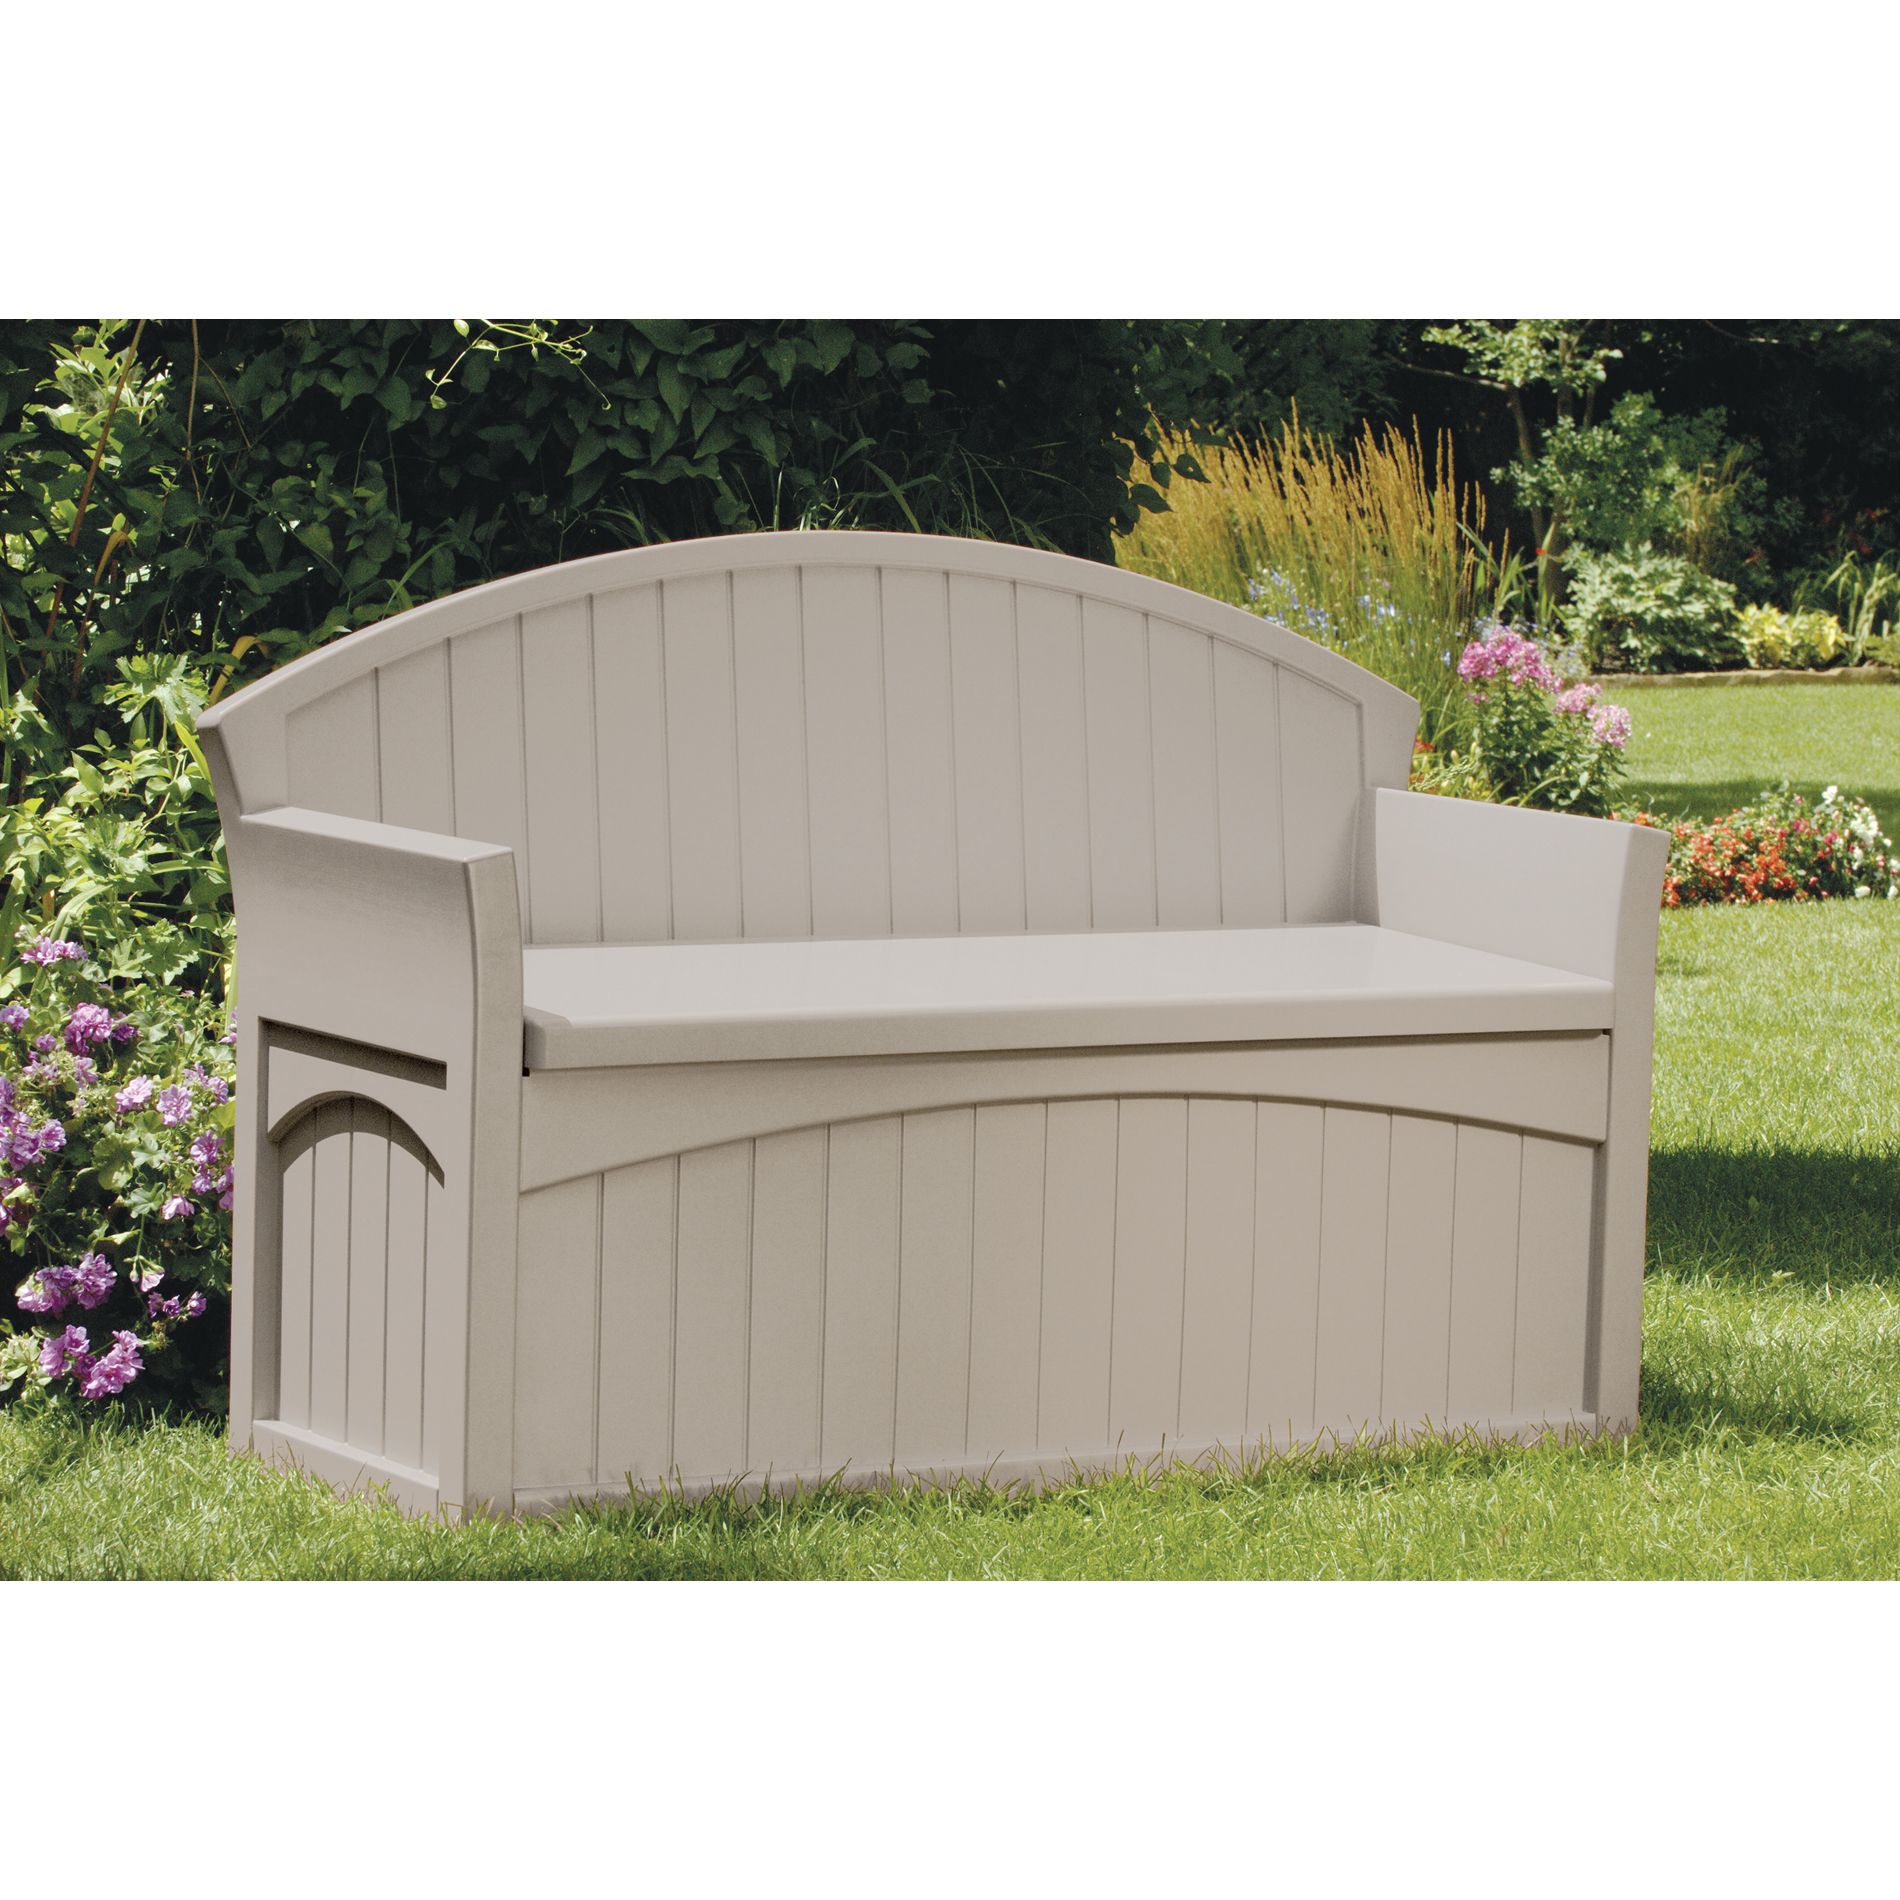 Suncast Patio Bench W Storage, Outdoor Porch Seat With Storage